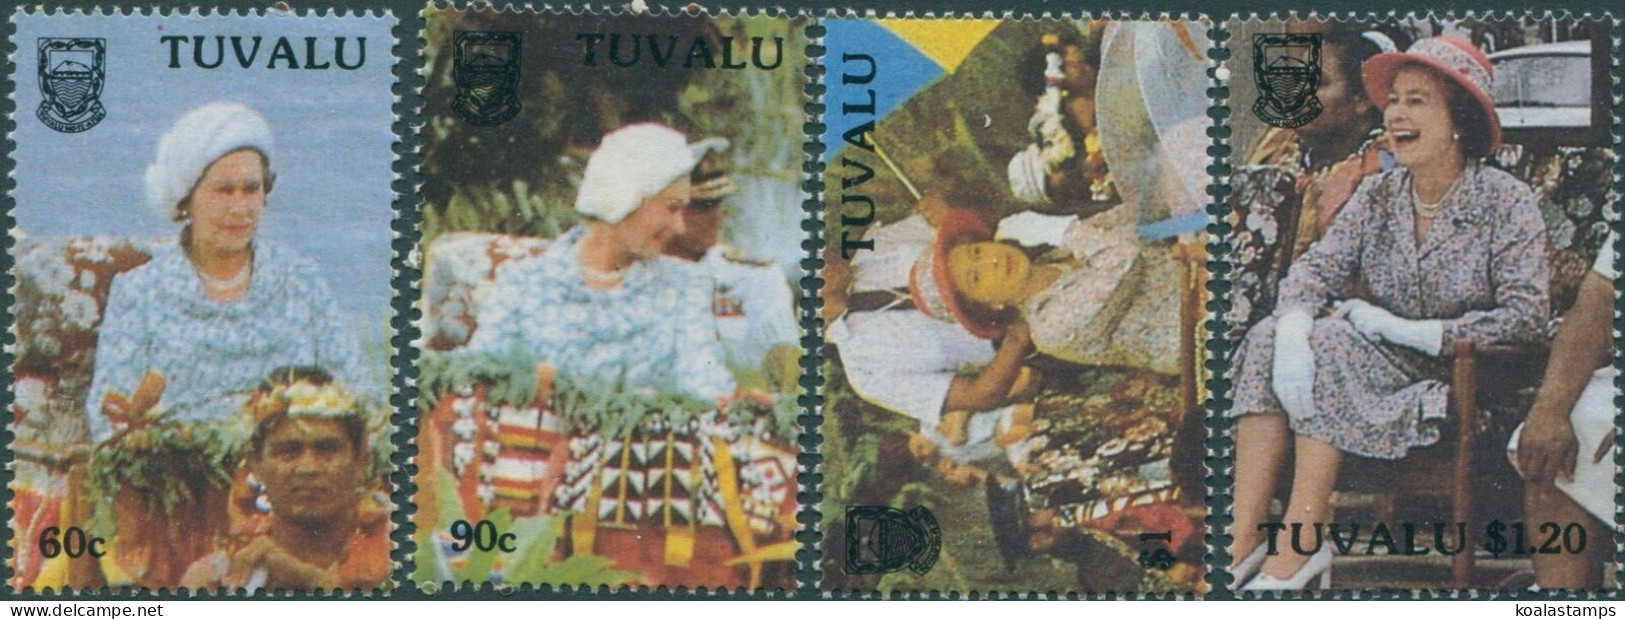 Tuvalu 1988 SG540-543 Independence Royal Visit Set MNH - Tuvalu